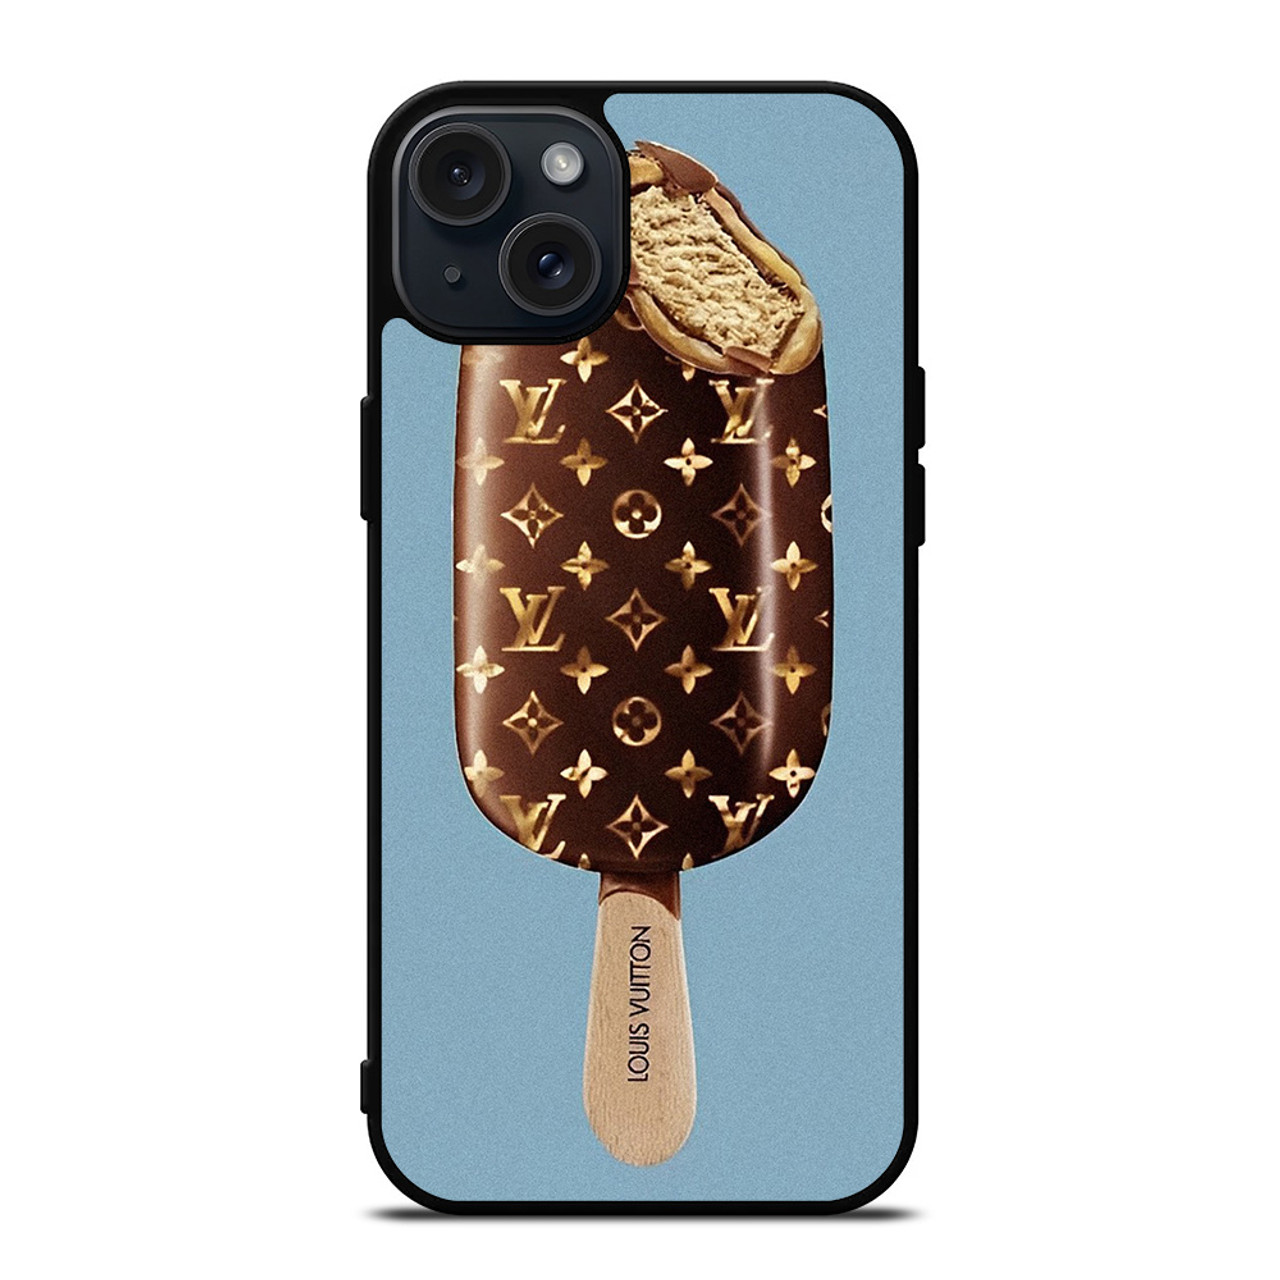 CHOCOLATE ICE CREAM LOUIS VUITTON iPhone 7 / 8 Case Cover